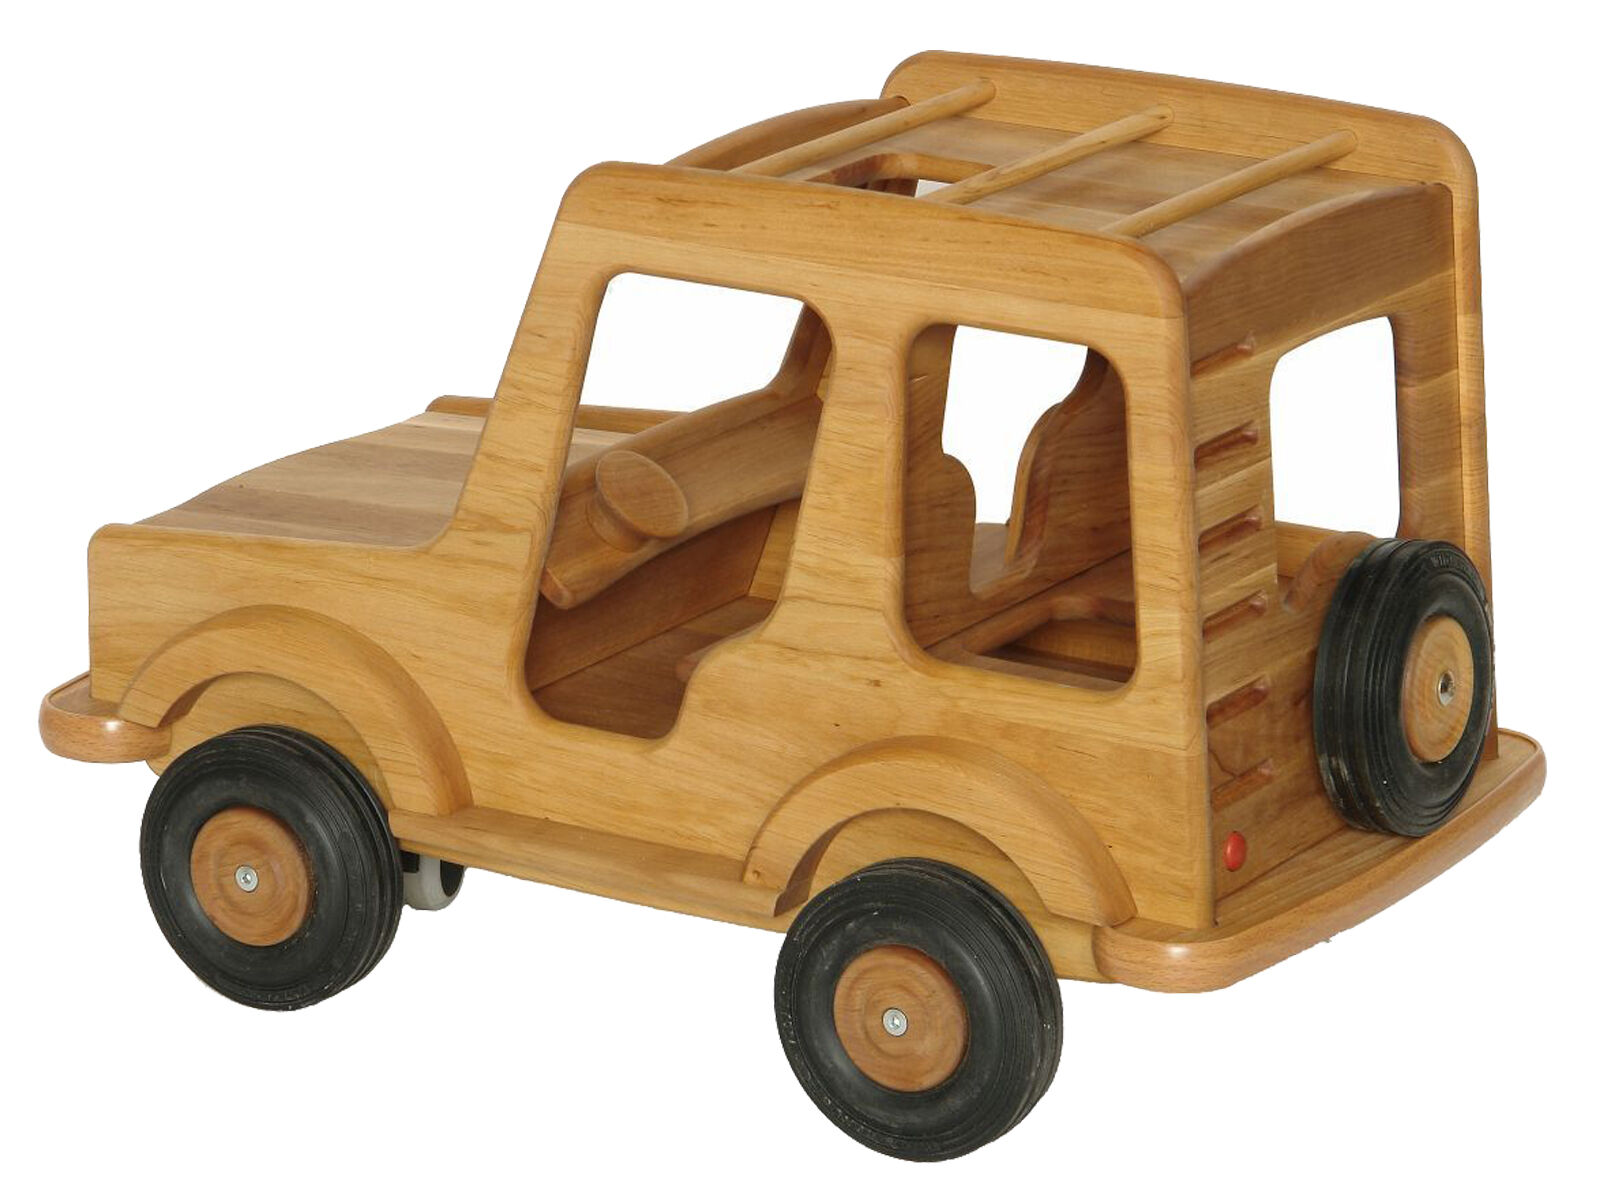 Großes Holzauto Geländewagen Puppenauto Safari-Fahrzeug Holz-SUV 931-5005